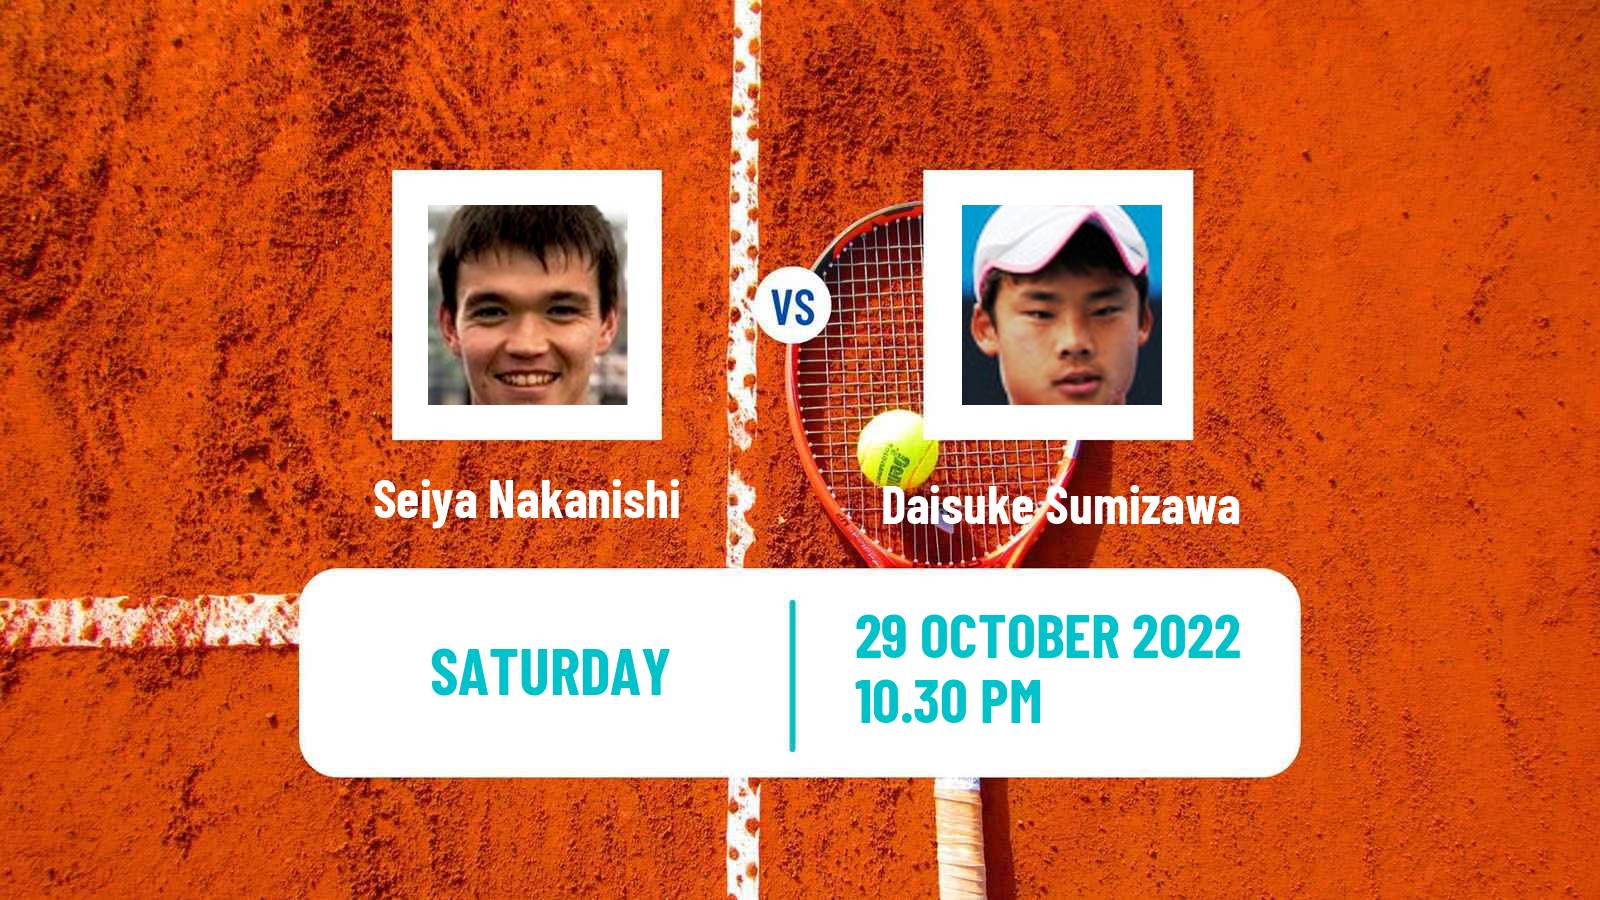 Tennis ATP Challenger Seiya Nakanishi - Daisuke Sumizawa